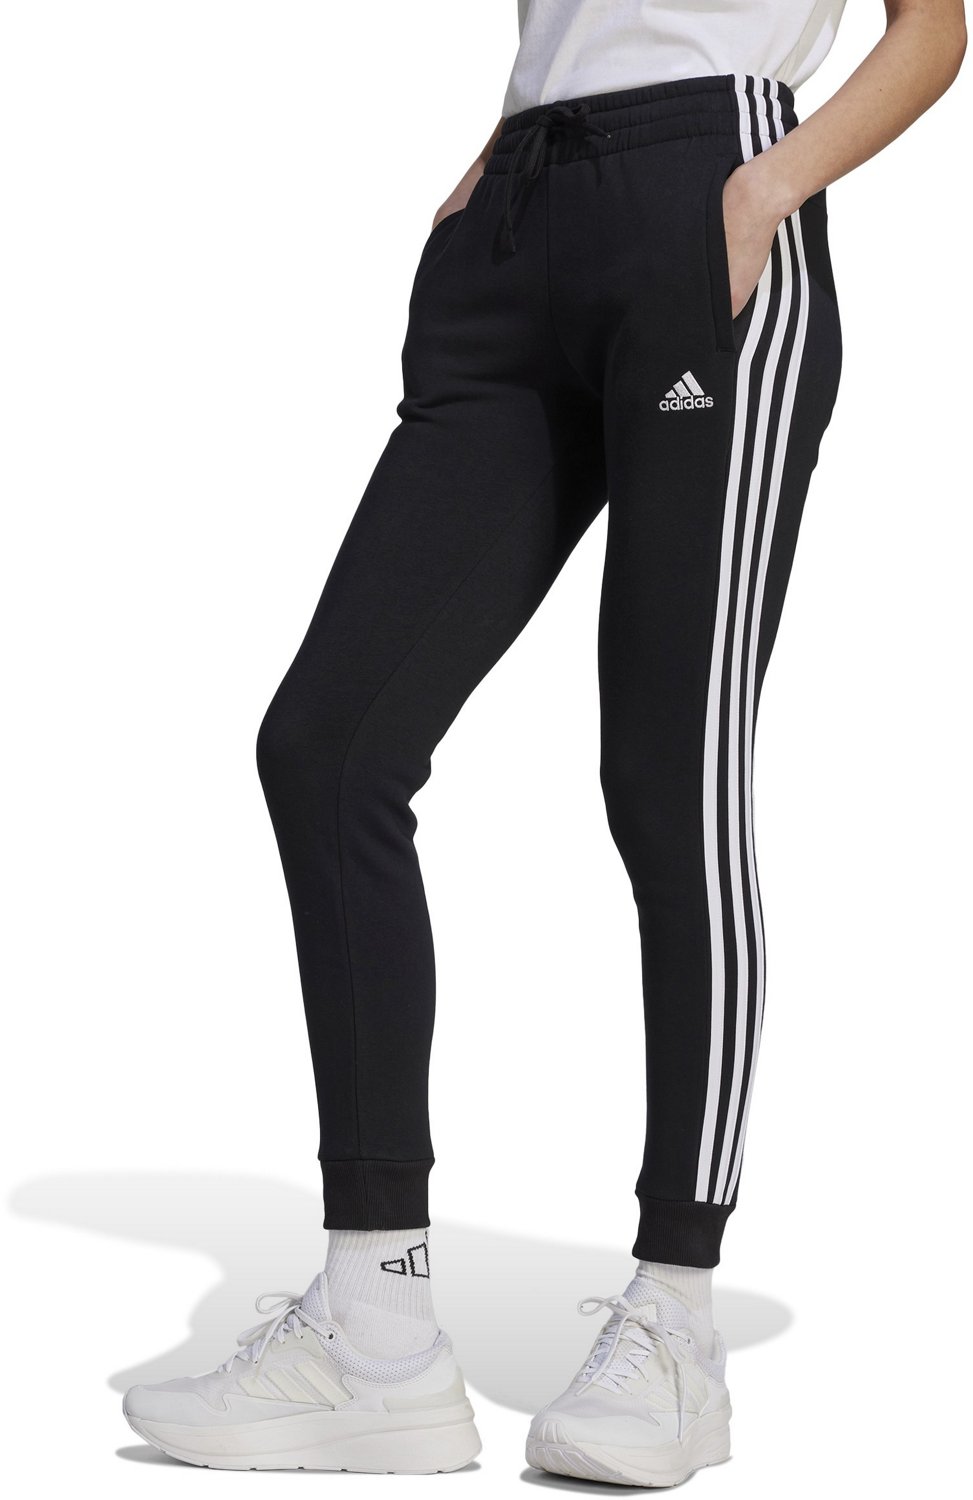 Womens Adidas Workout Pants - Buy Womens Adidas Workout Pants